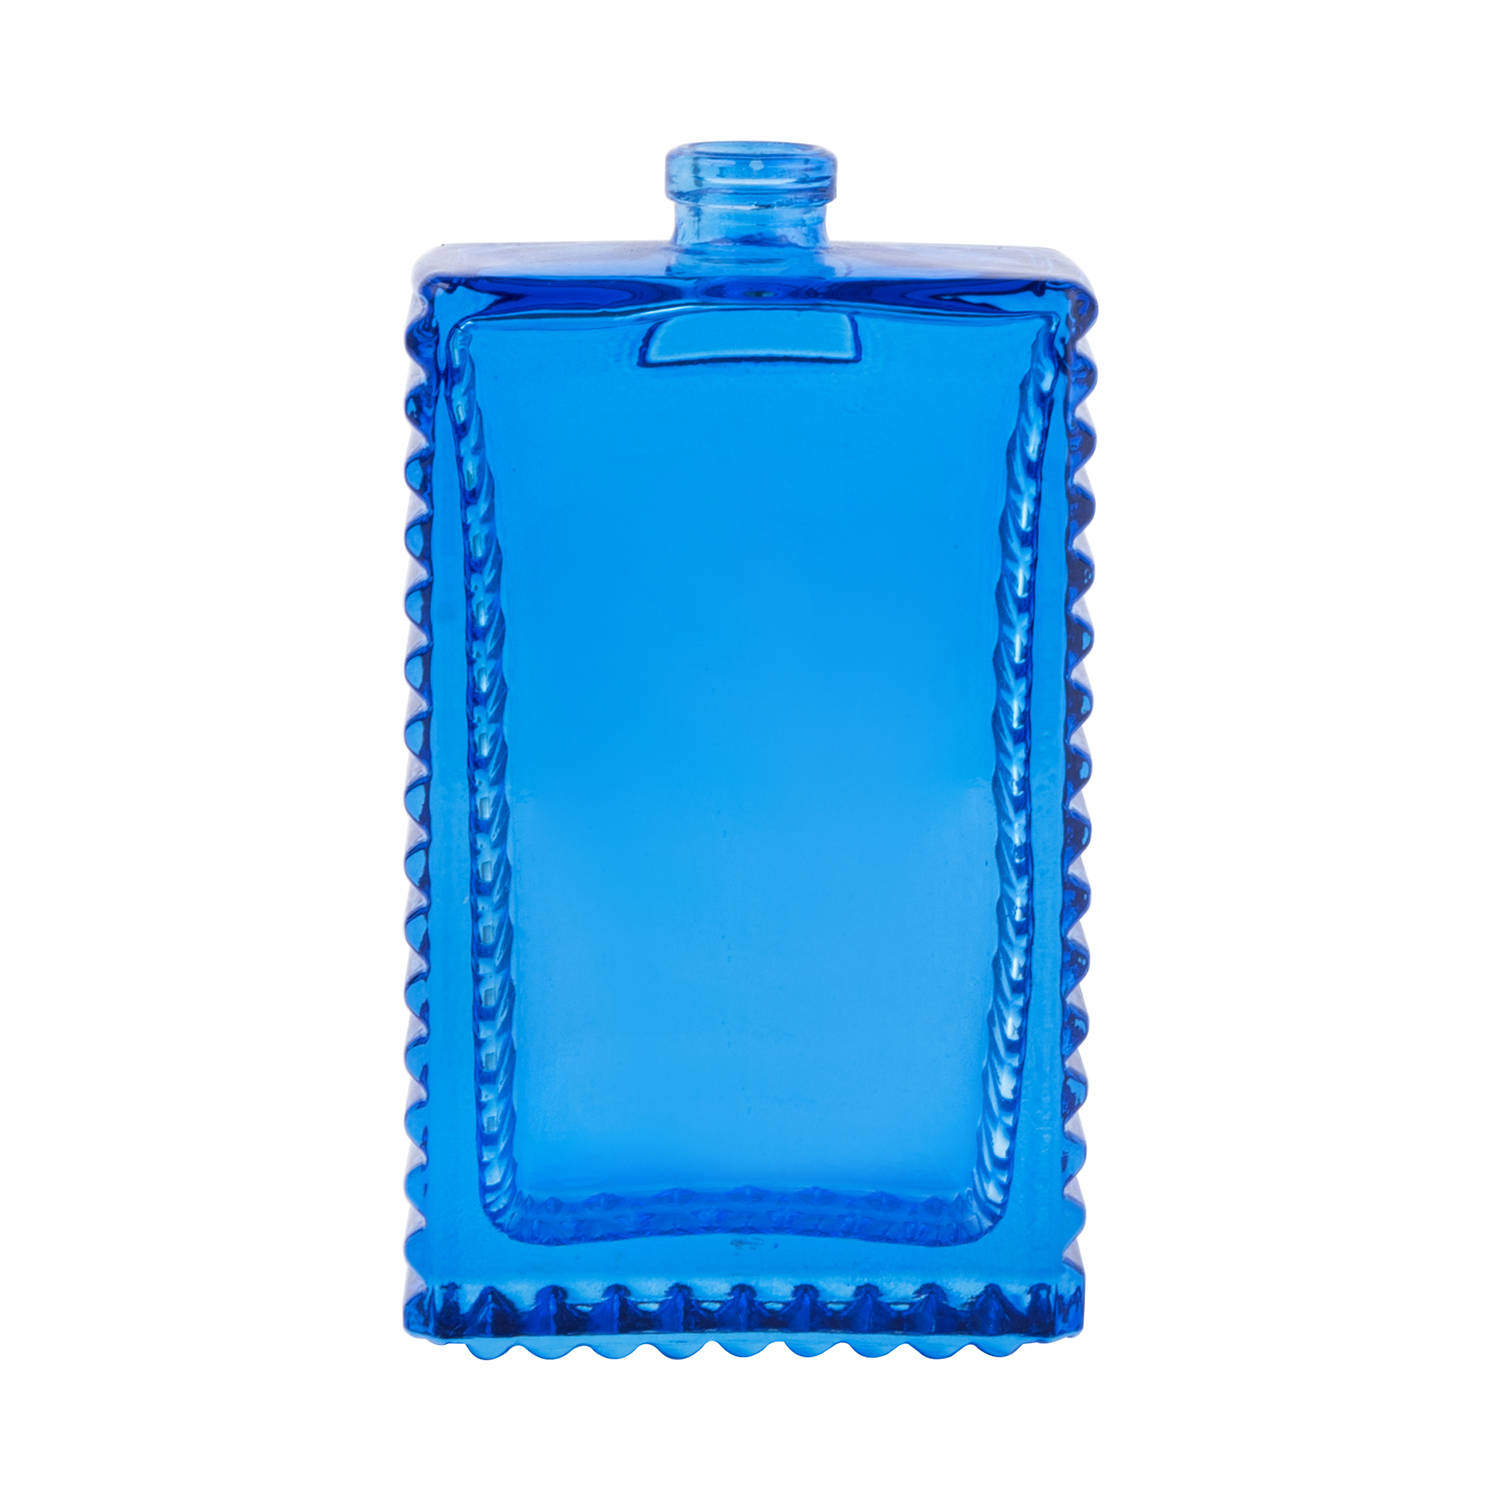 50ml Glass Perfume Bottle with MS Cap Perfume Bottle Wholesale